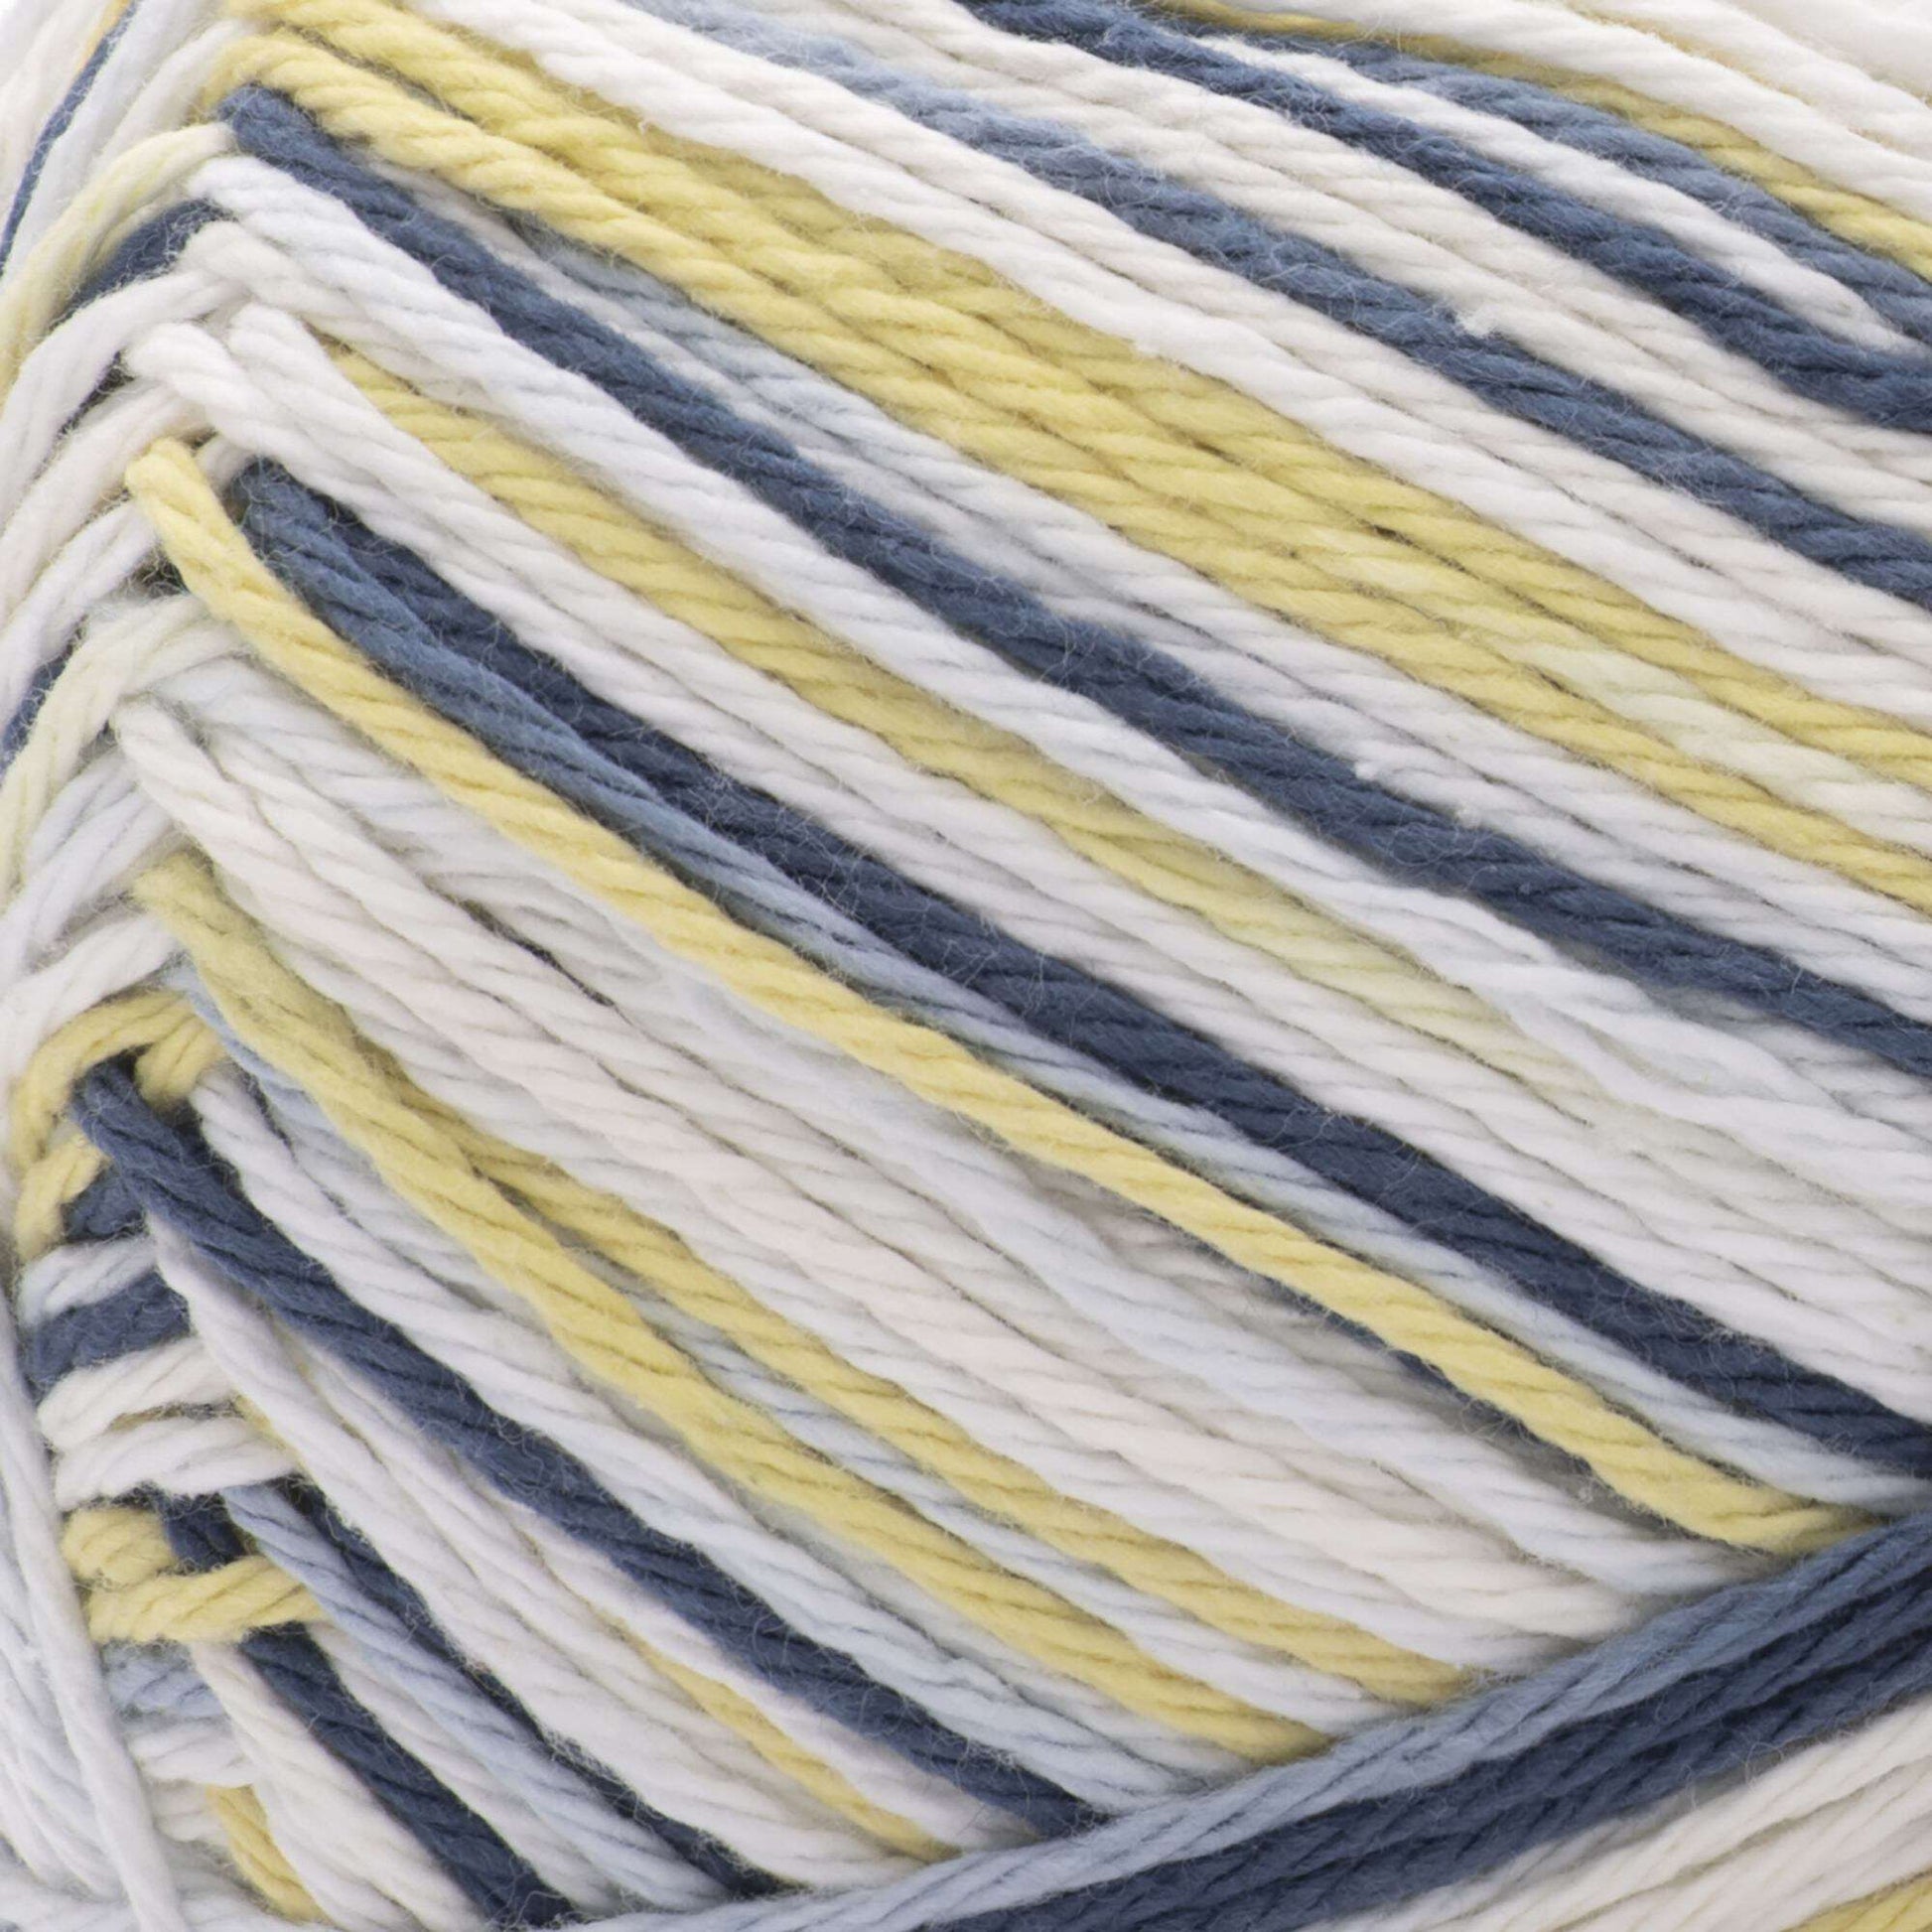 Bernat Handicrafter Cotton Ombres Yarn (340g/12oz) - Discontinued Shades Blended Navy Lemons